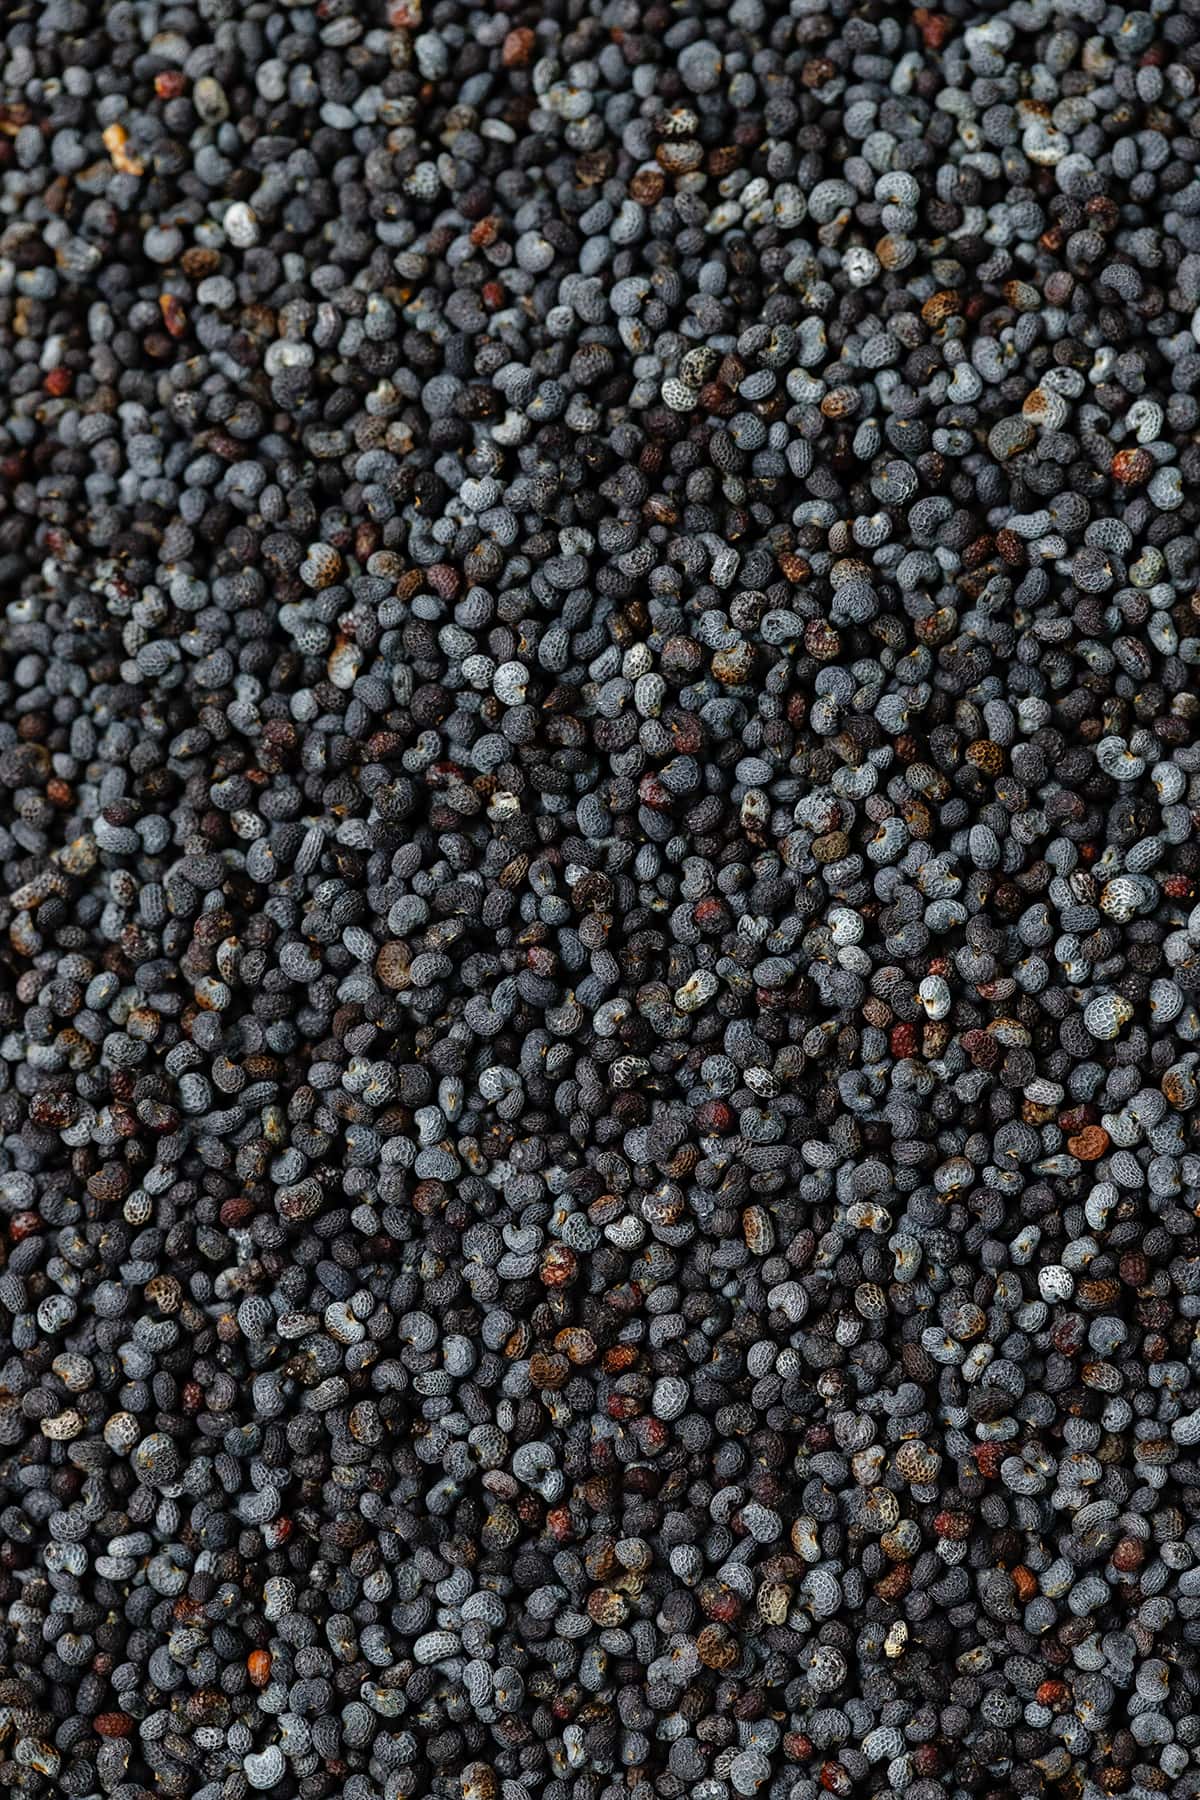 A macro shot of poppy seeds